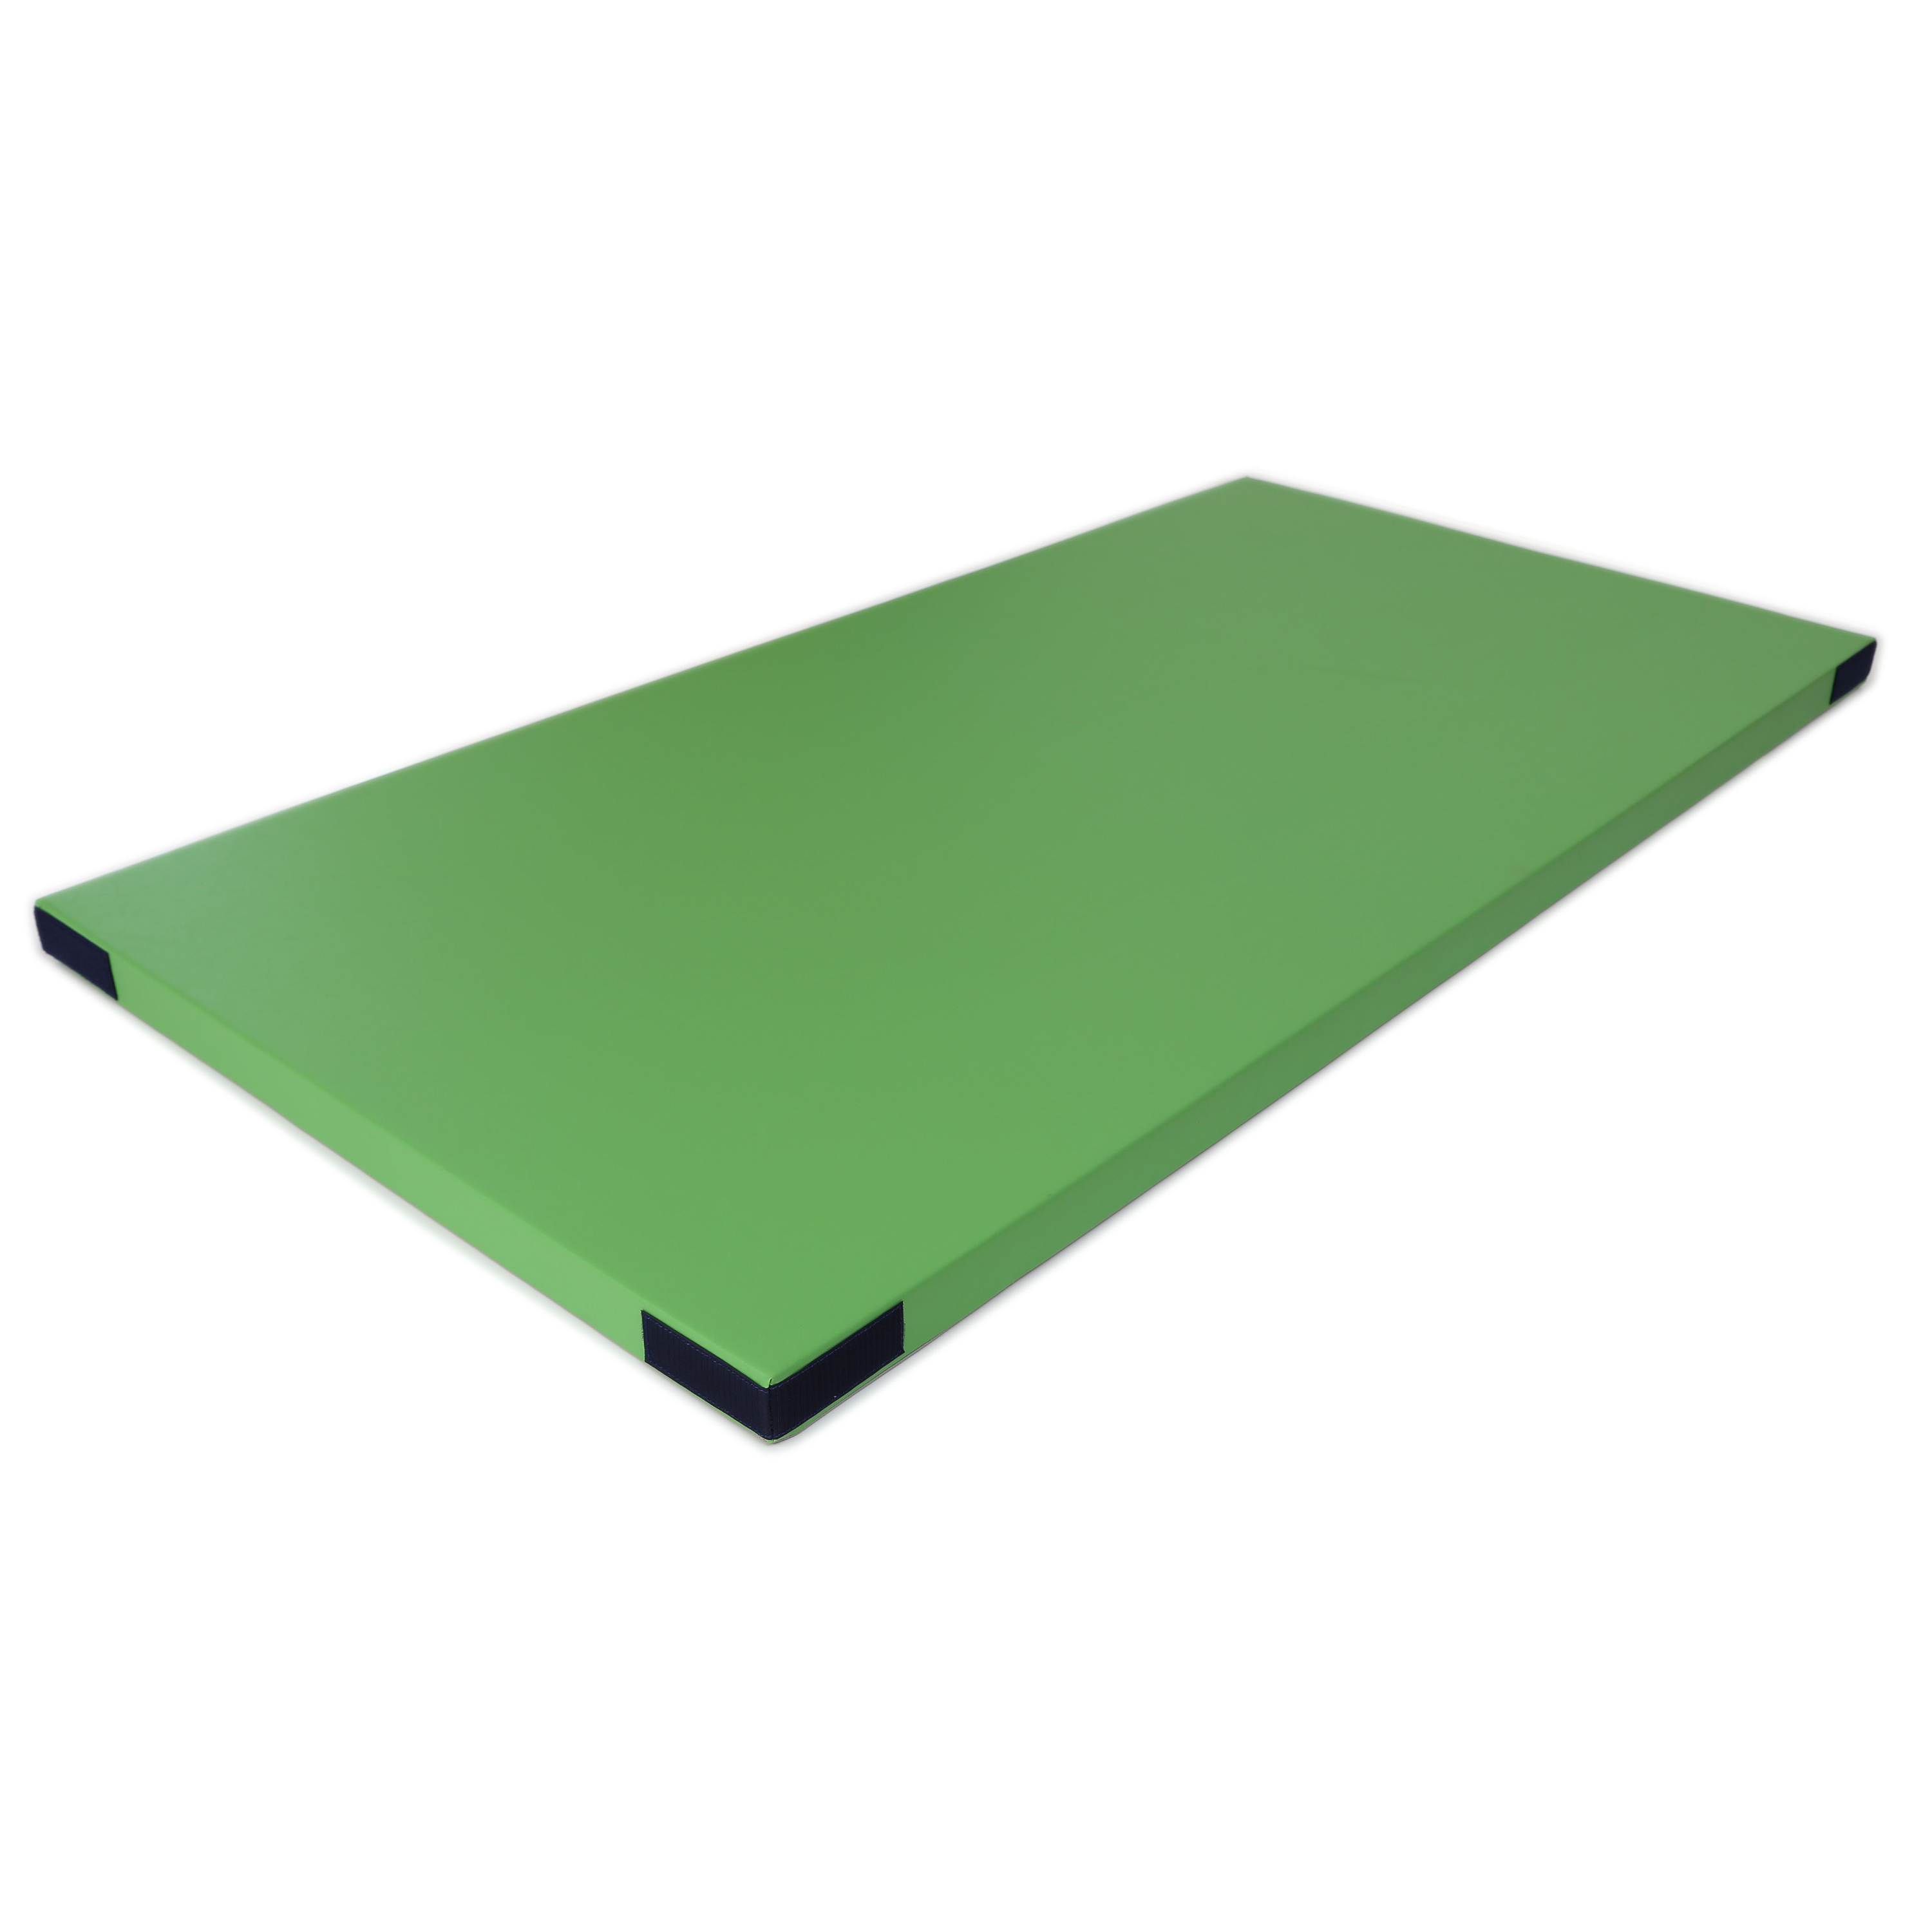 Fallschutzmatte Superleicht 'hellgrün' Klett, 200 x 100 cm